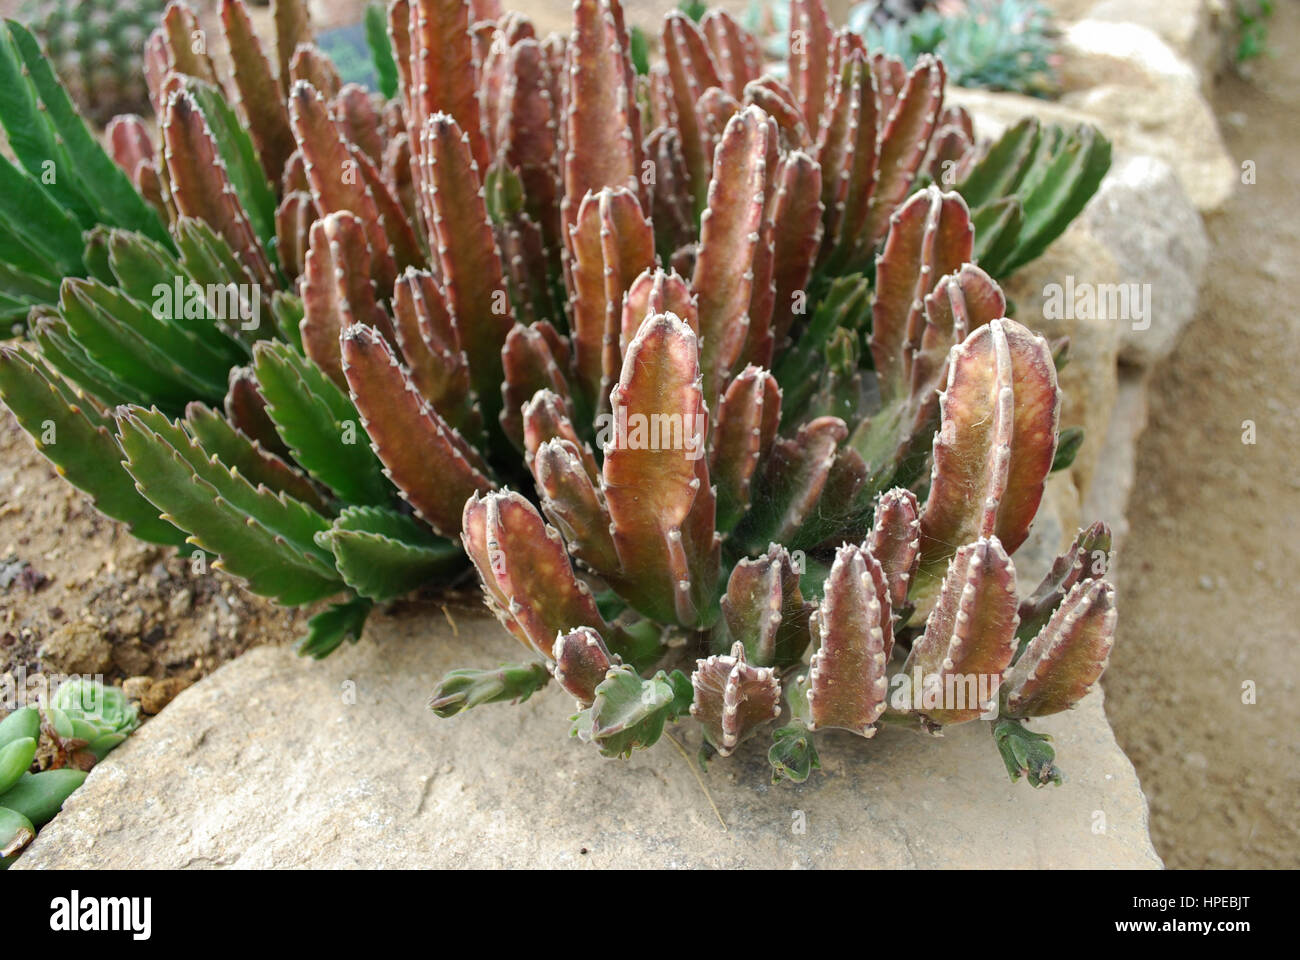 Stapelia grandiflora (carrion plant, starfish flower, or starfish cactus) is a flowering plant in the Stapelia genus. Stock Photo